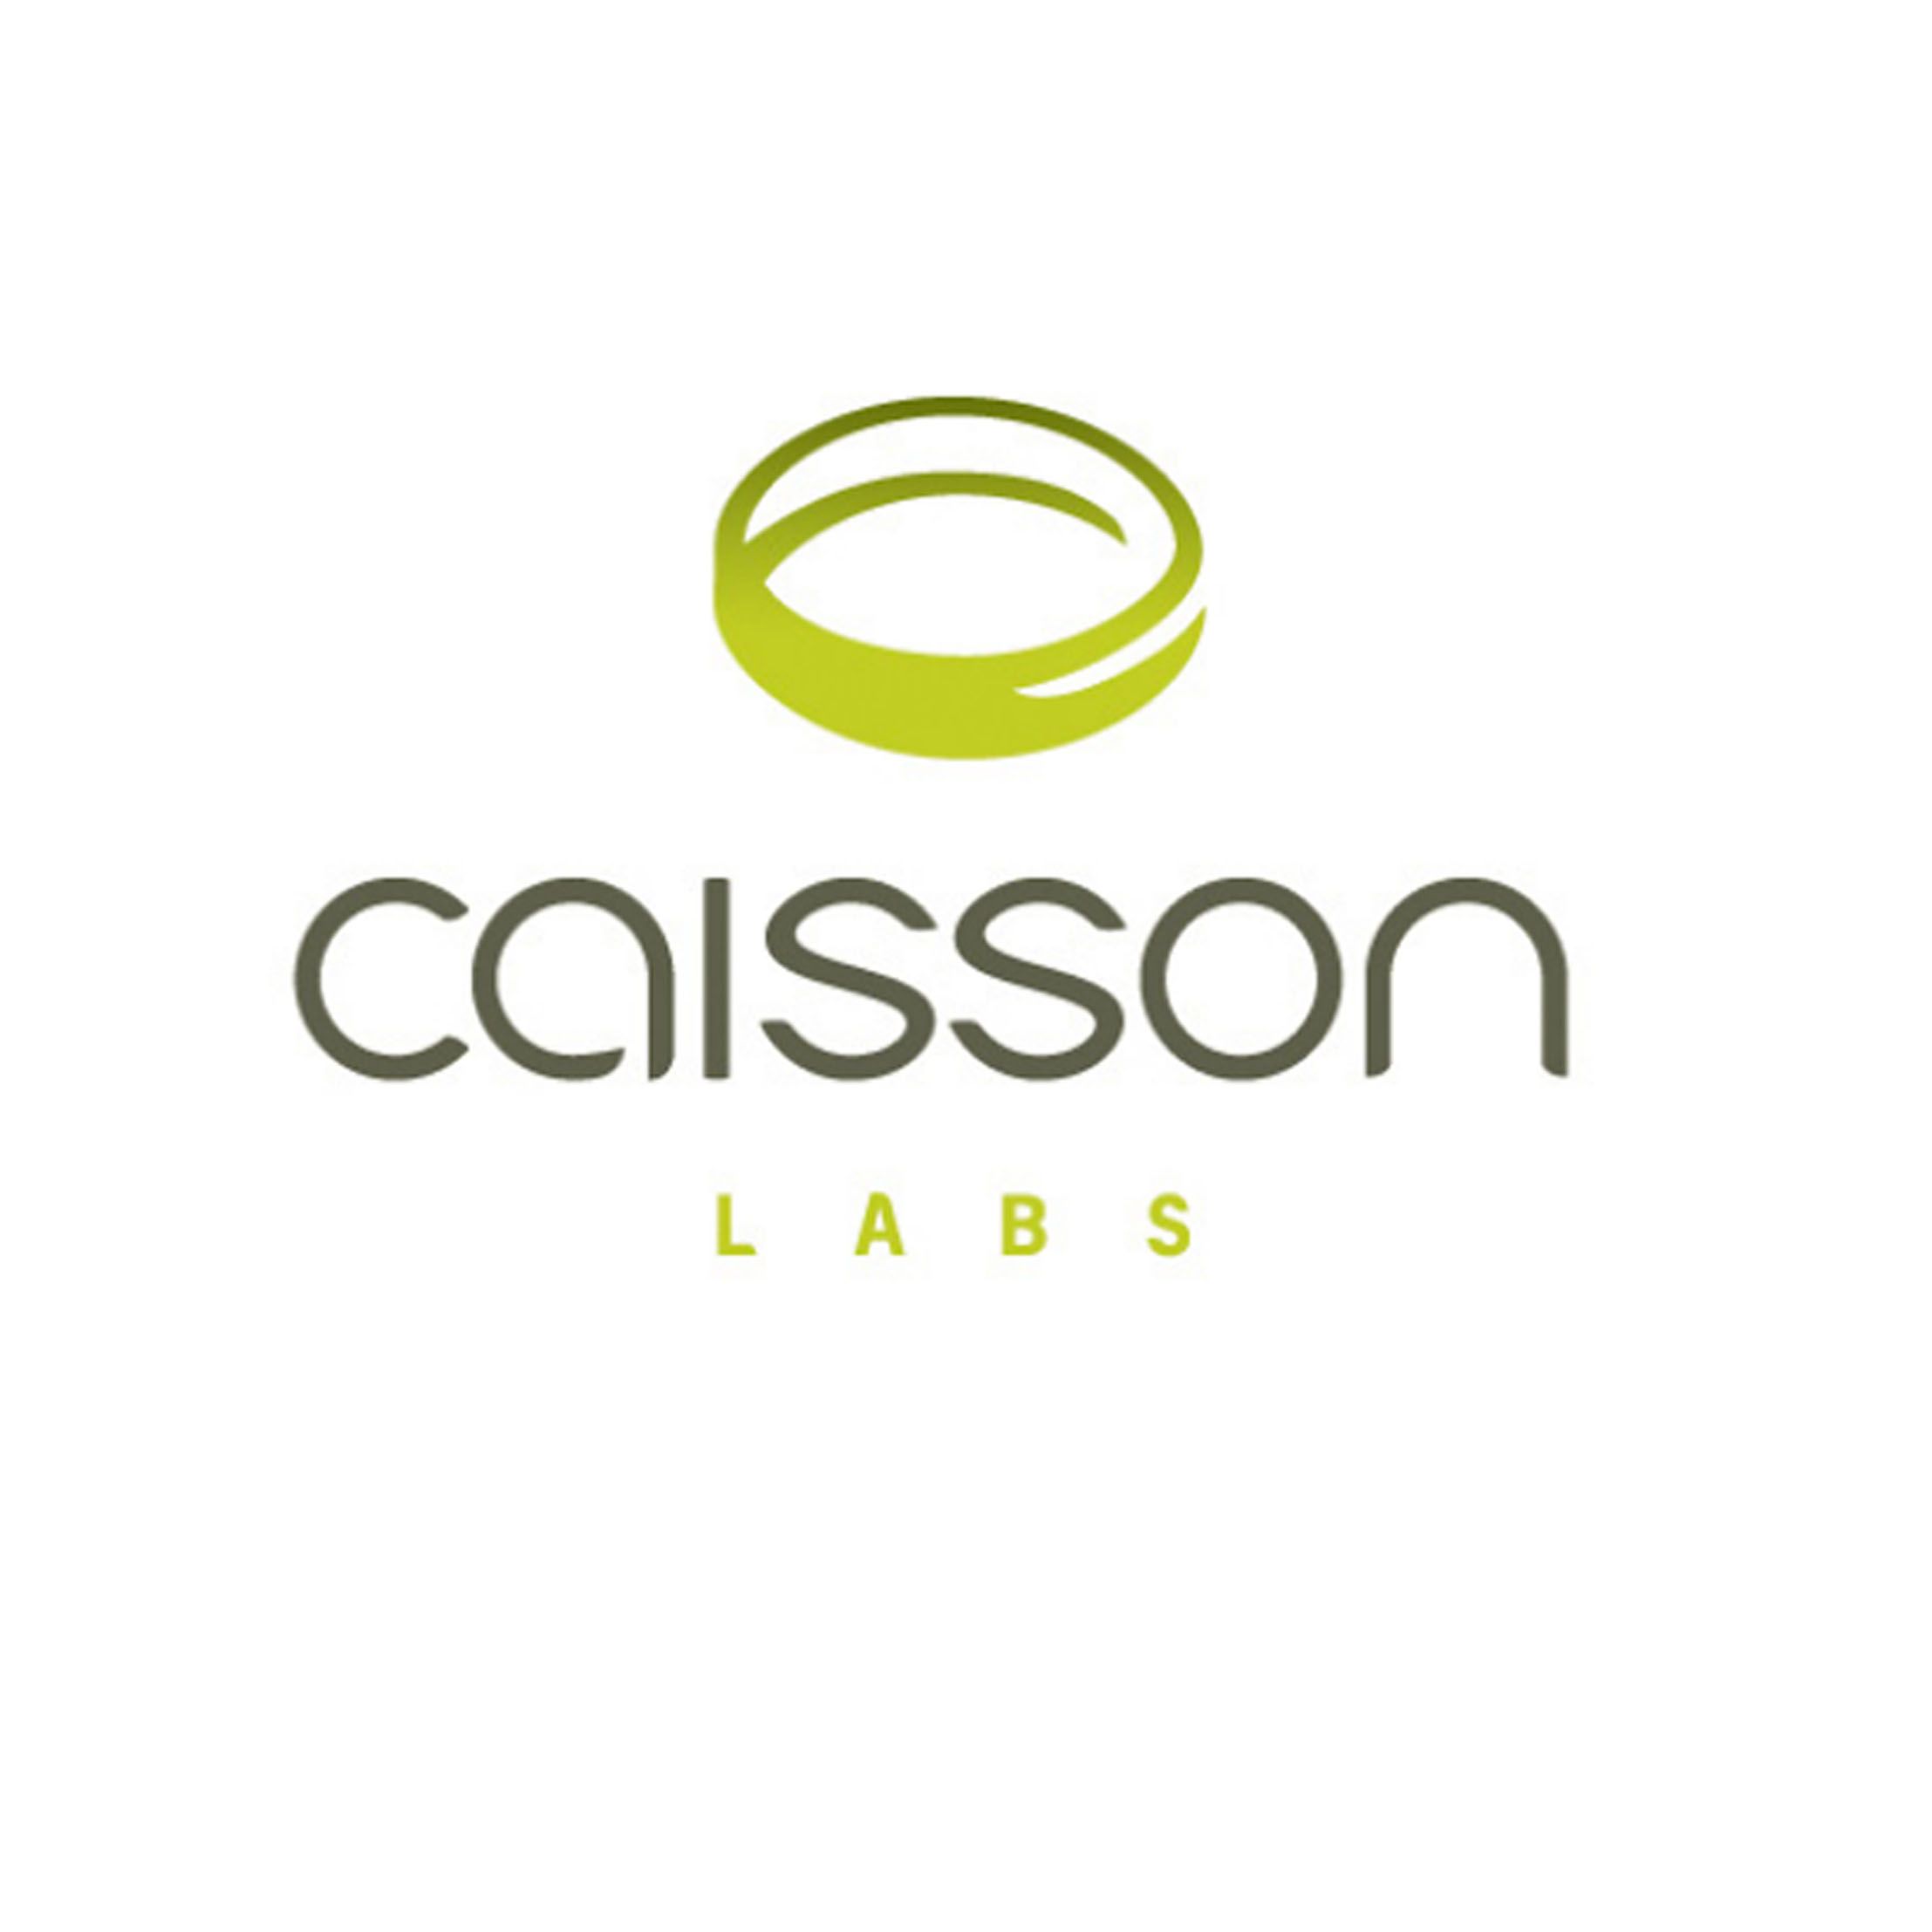 Caisson Labs细胞培养基、FBS、缓冲溶液、抗菌剂